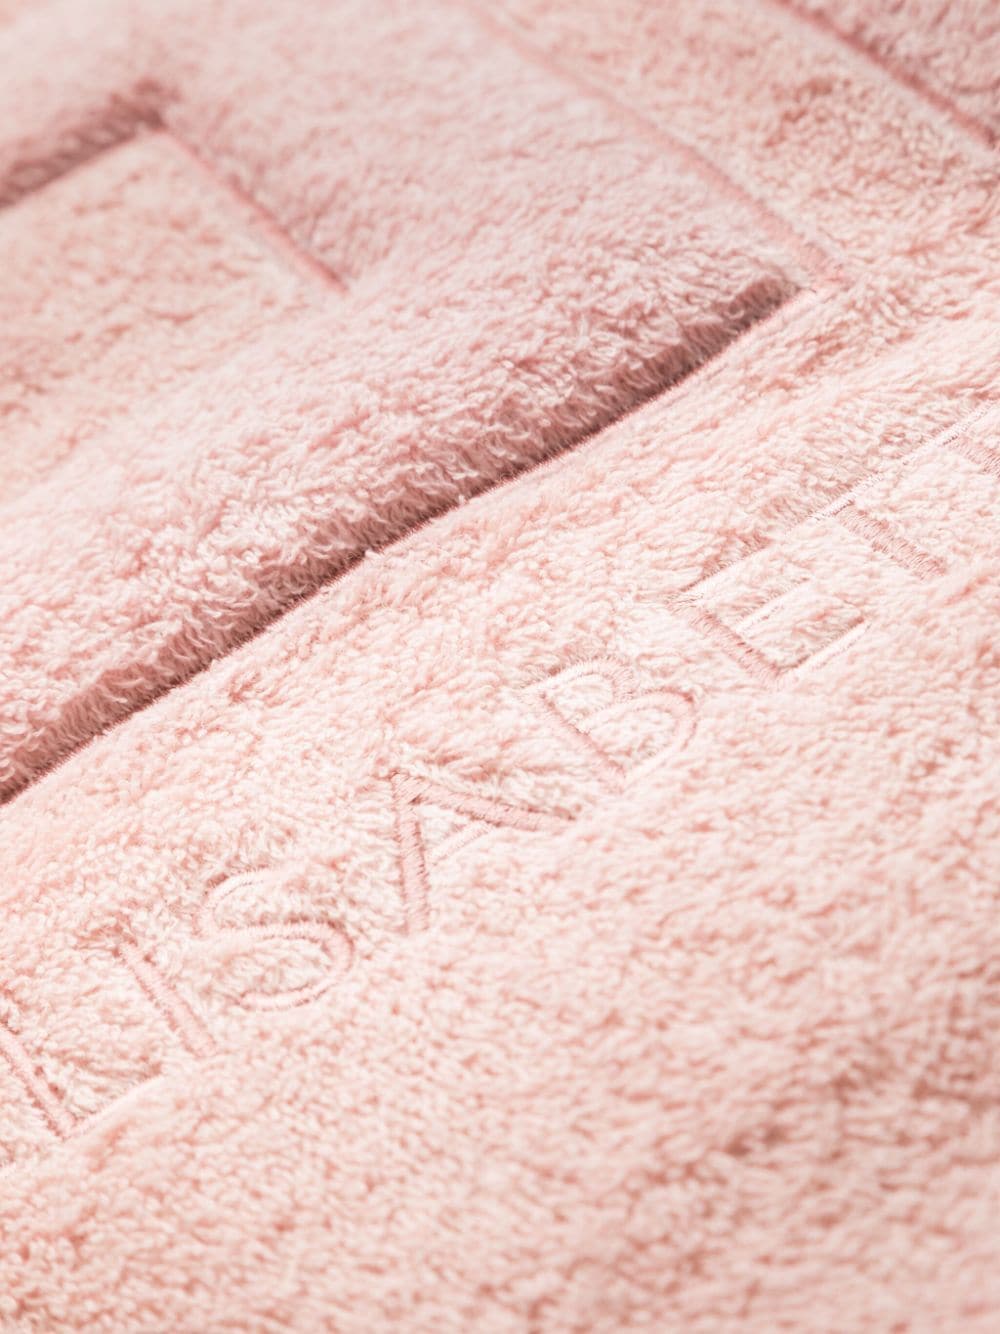 Asciugamano rosa bambina